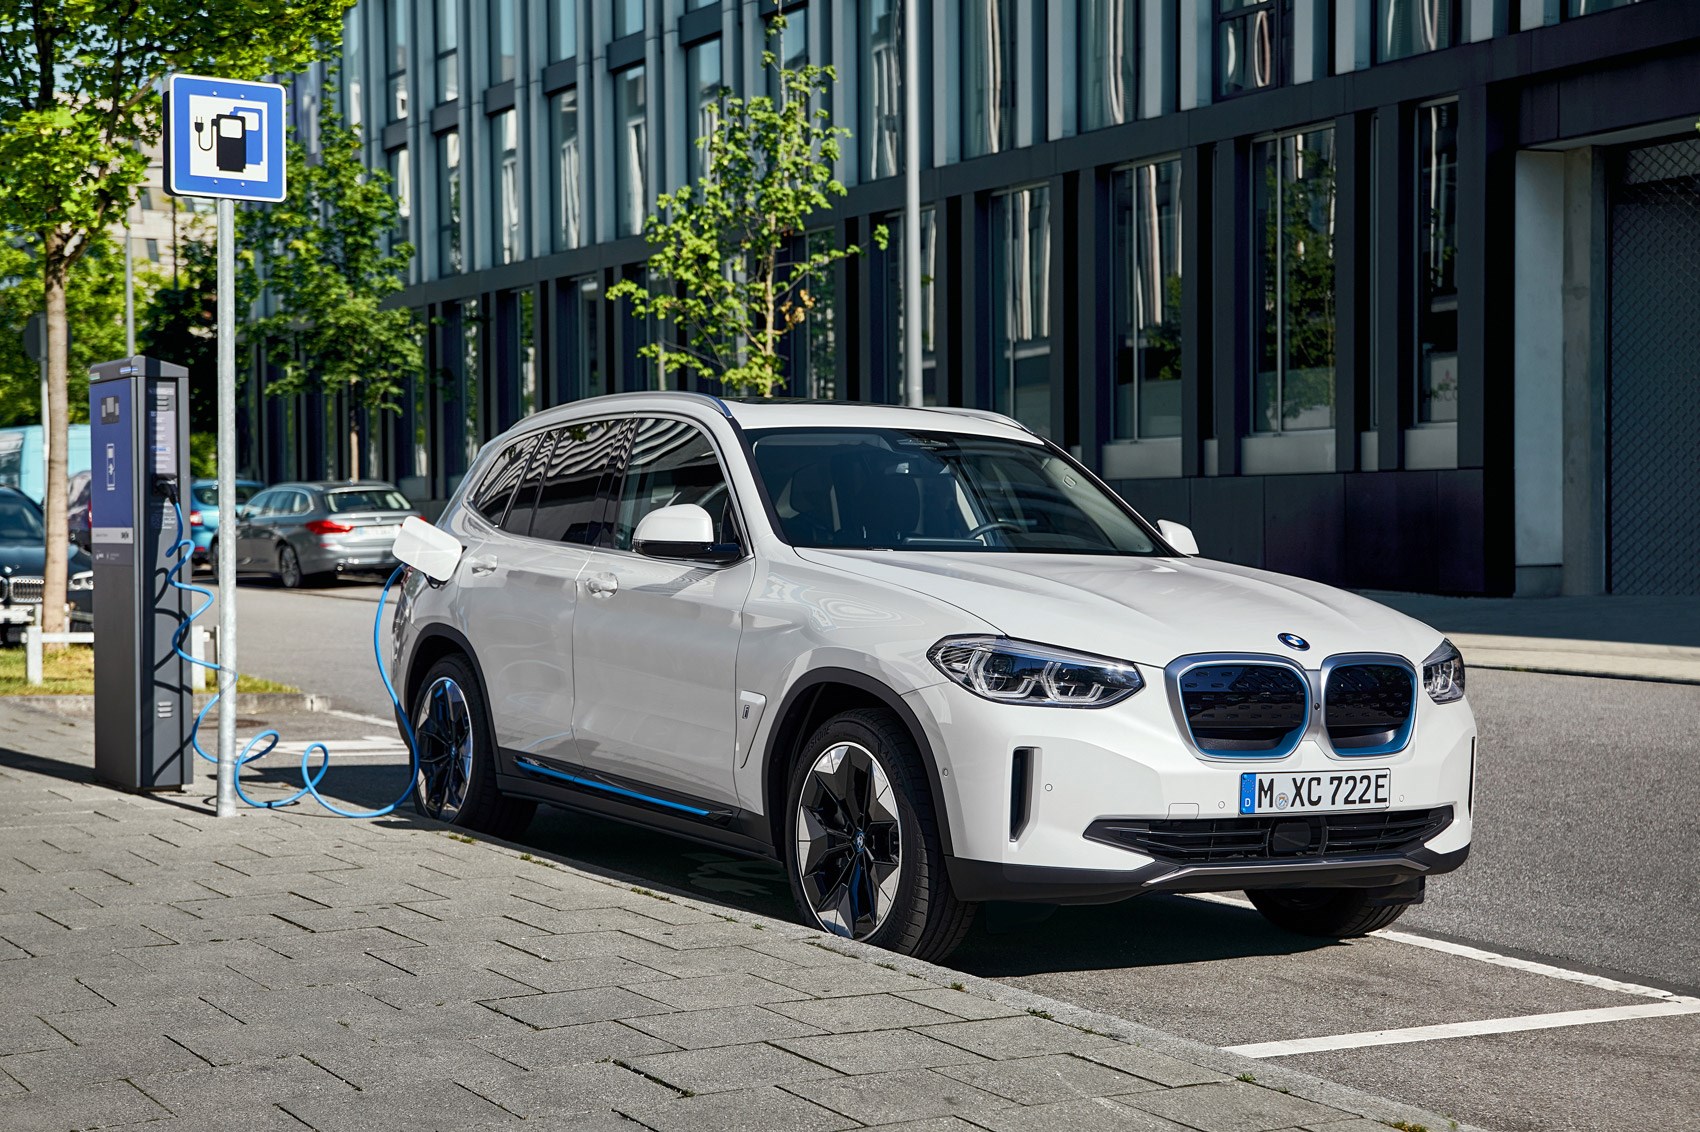 New BMW iX3 electric SUV: Munich 